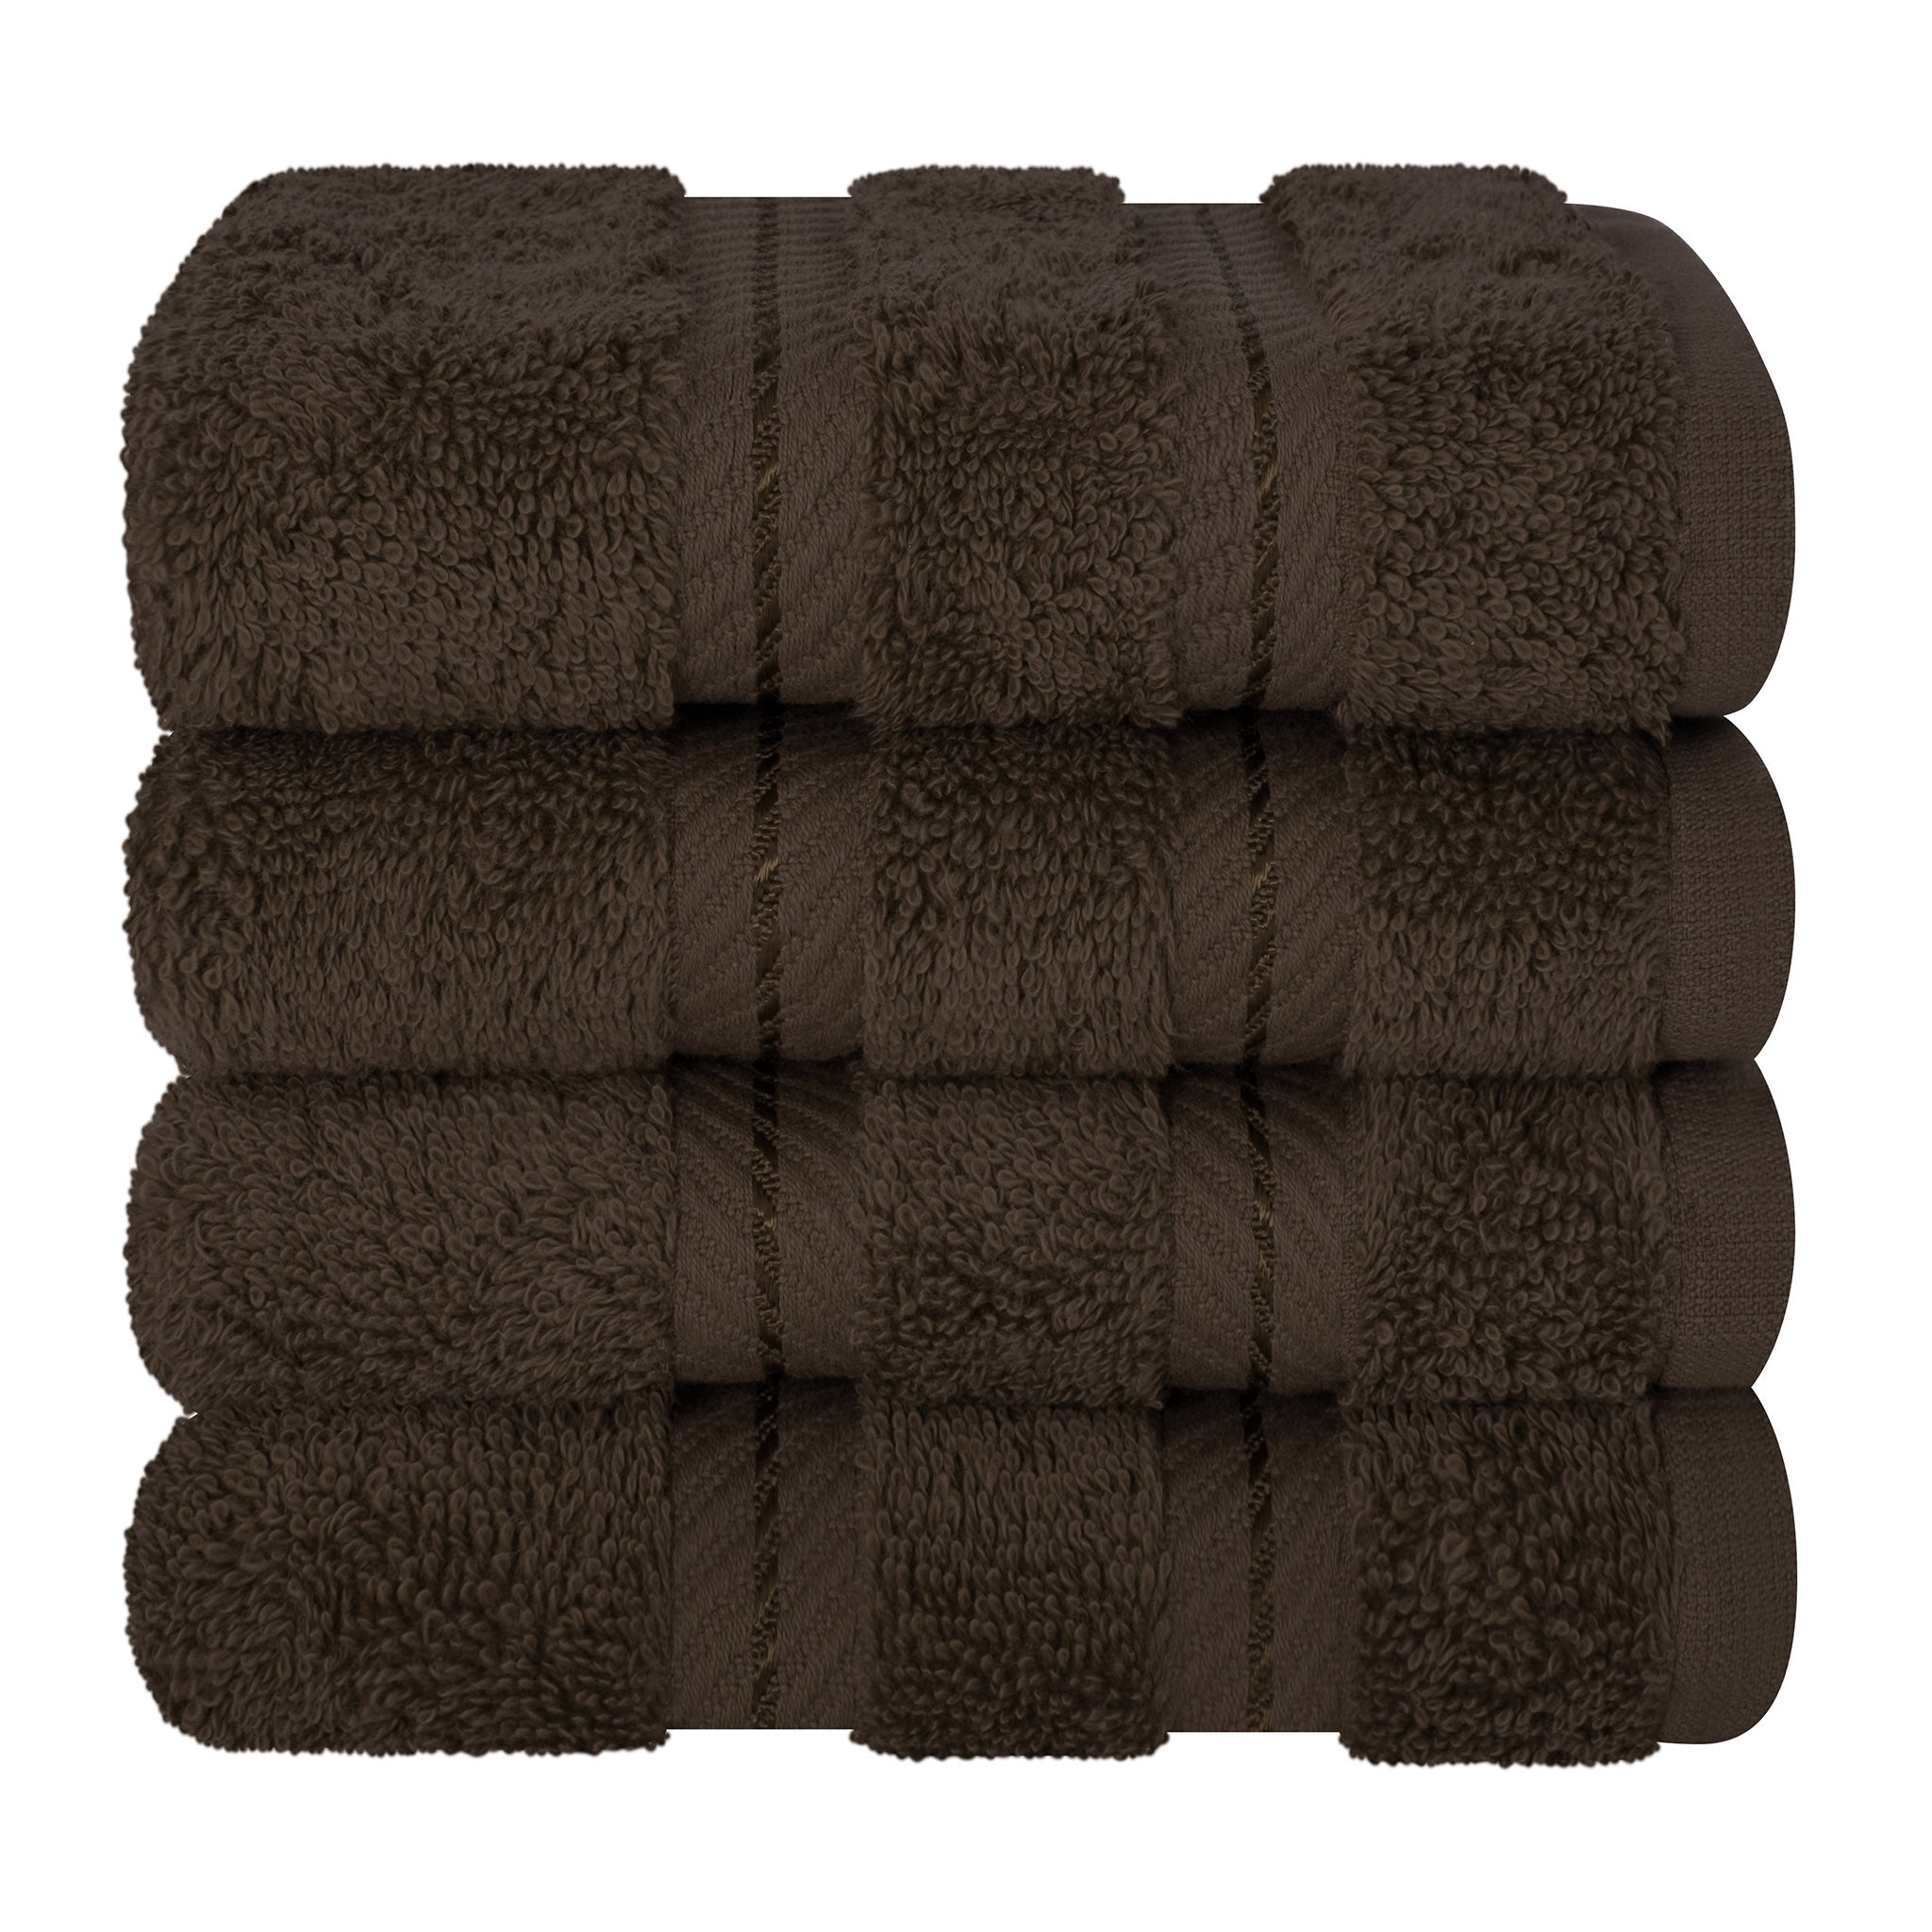  American Soft Linen 100% Turkish Cotton 4 Piece Washcloth Set - Wholesale - chocolate-brown-7